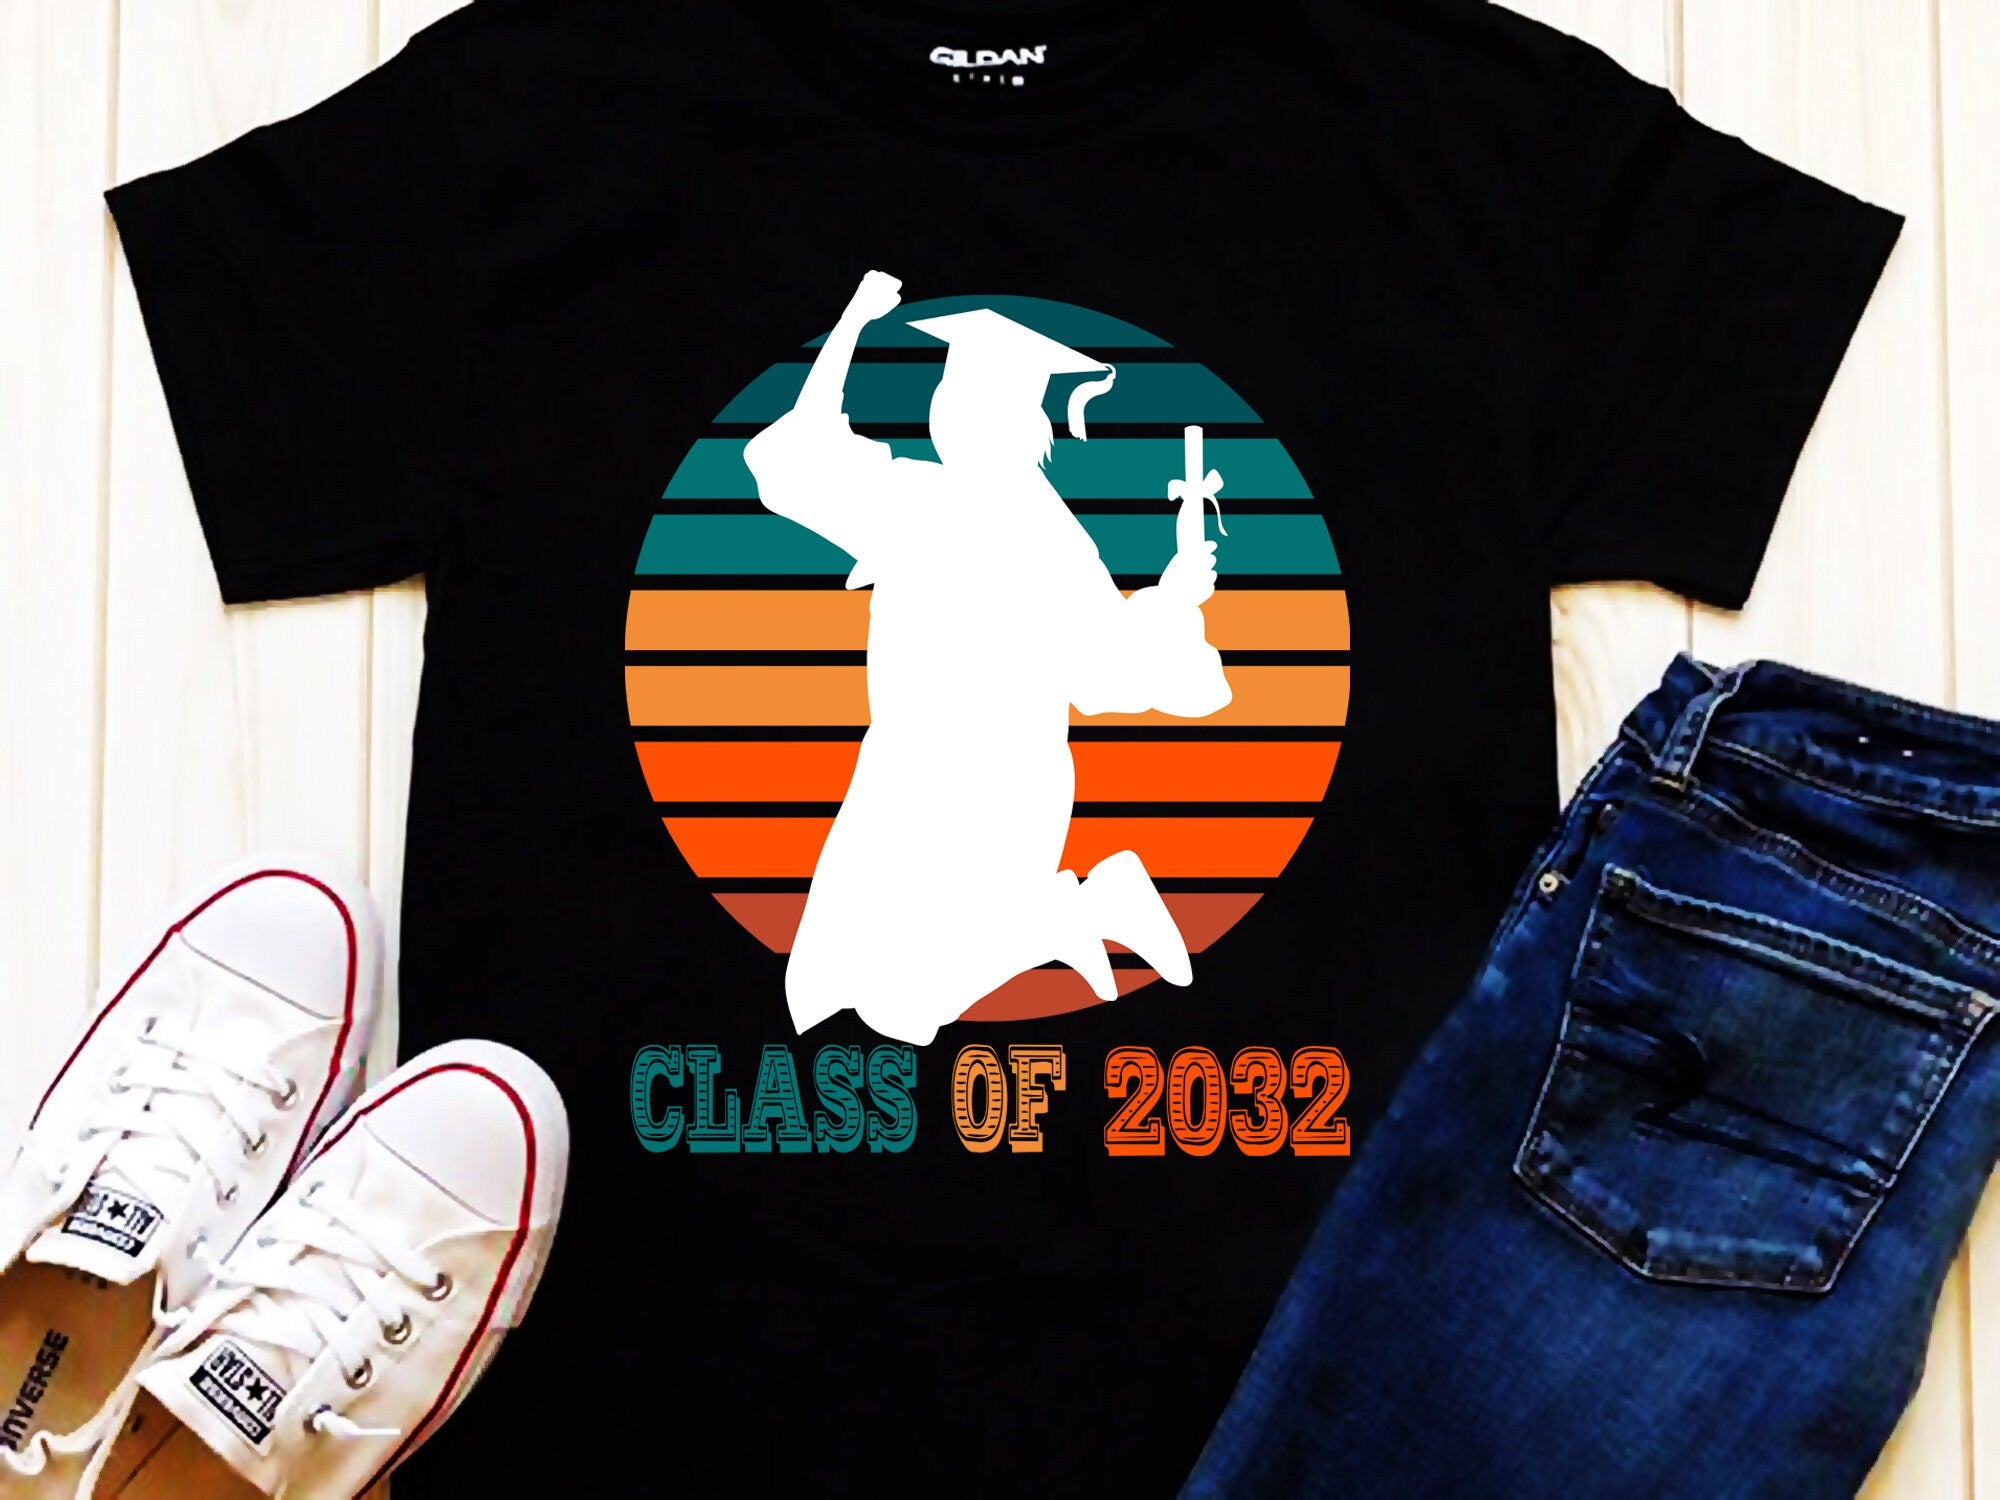 Turma de 2032 | Camisetas retrô Sunset, presente de formatura, camisa retrô sênior, camisa de formatura, camisa classe de 2032, camisa sênior 2032 - plusminusco.com